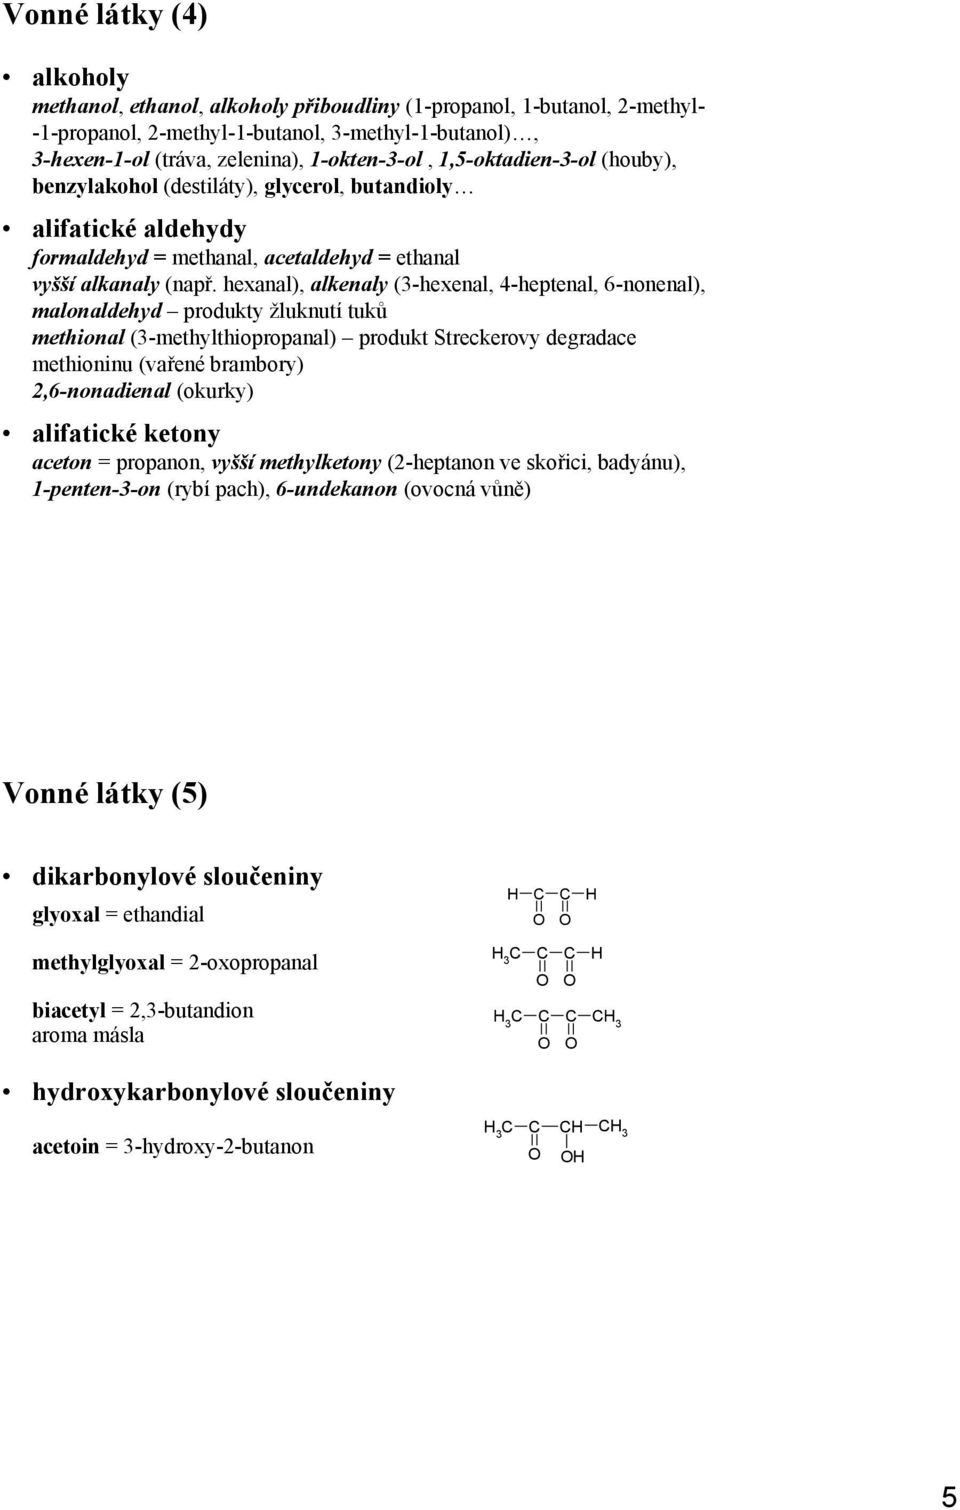 hexanal), alkenaly (3-hexenal, 4-heptenal, 6-nonenal), malonaldehyd produkty žluknutí tuků methional (3-methylthiopropanal) produkt Streckerovy degradace methioninu (vařené brambory) 2,6-nonadienal